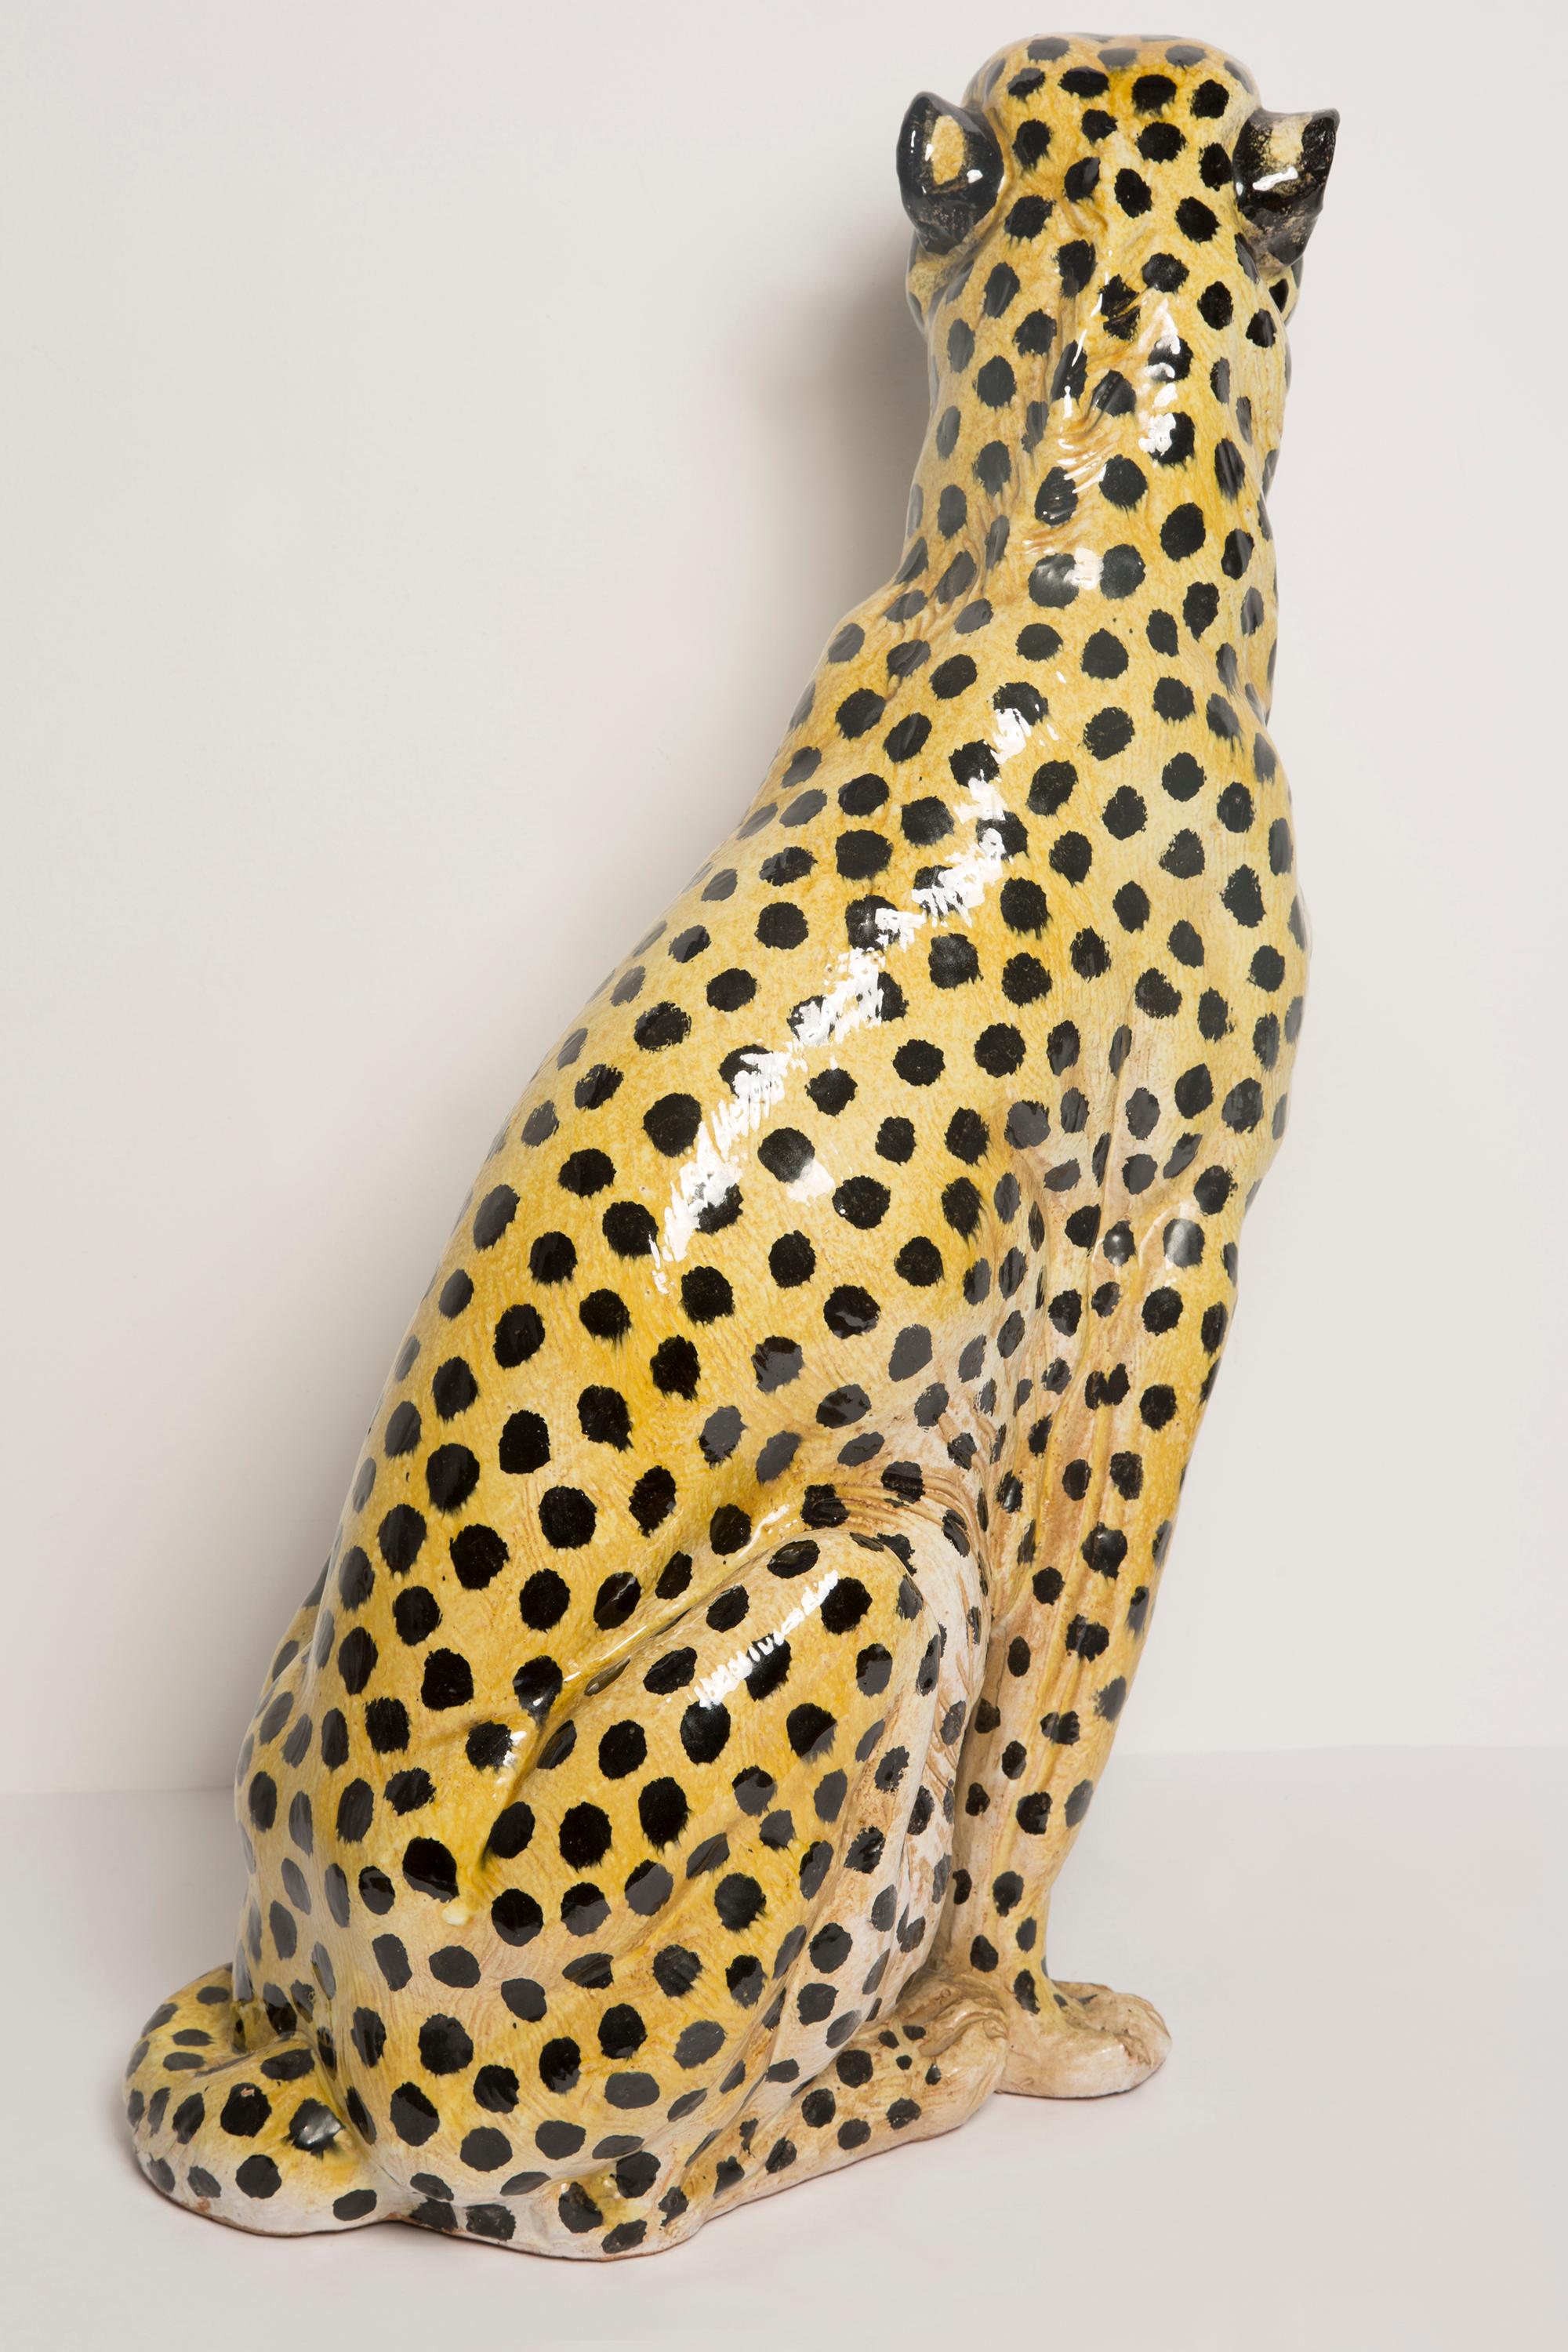 Midcentury Big Cheetah Hand Painted Terracotta Ceramic Sculpture, Italy, 1960s 1